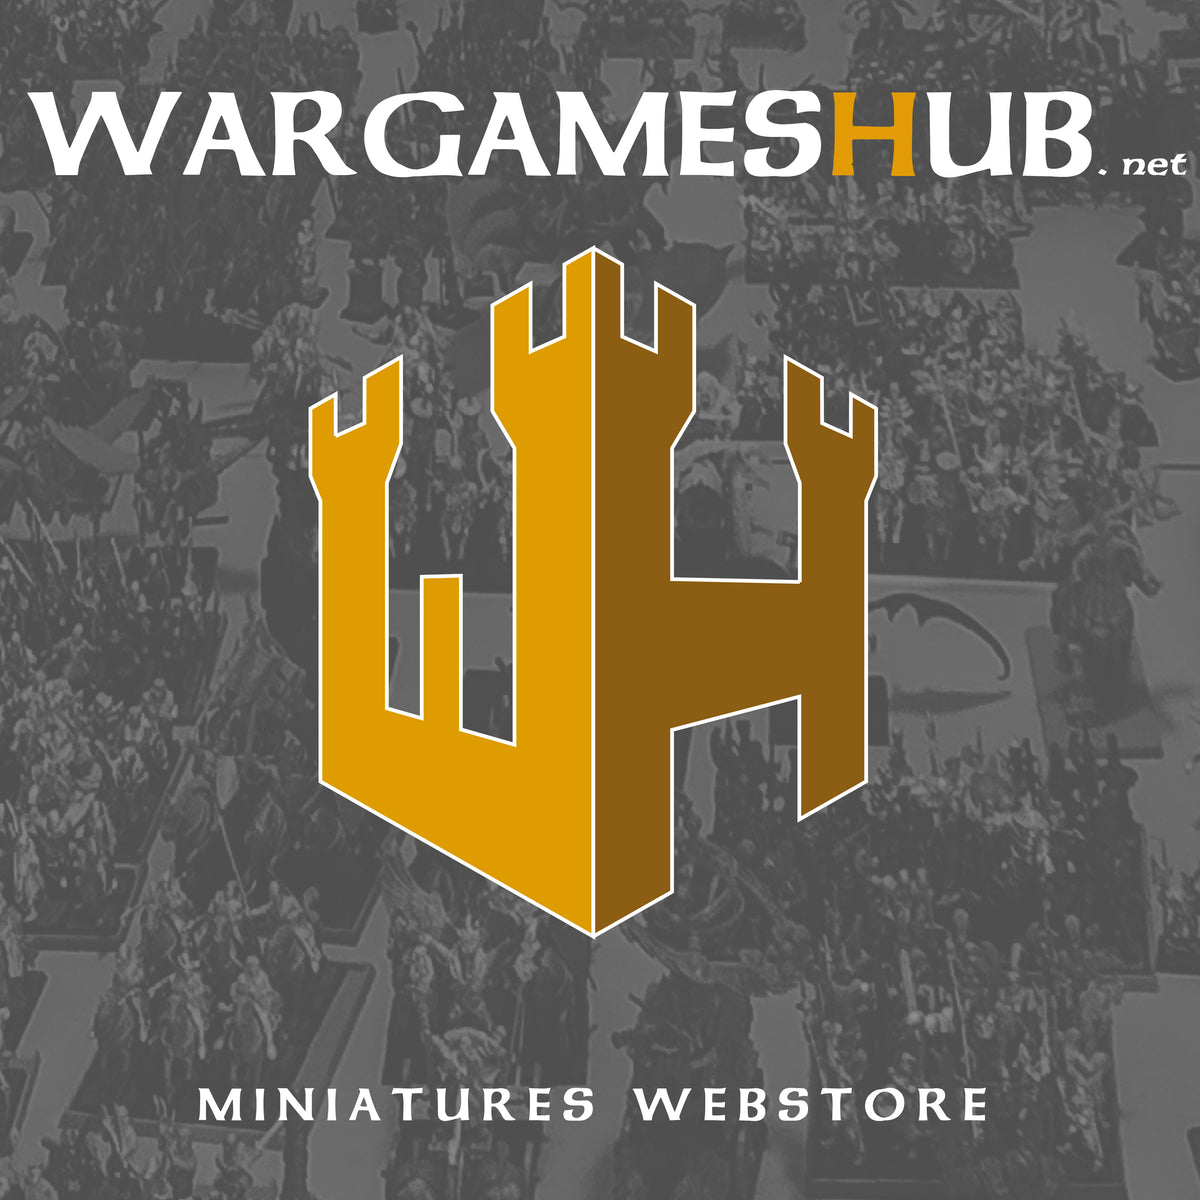 WargamesHub – Wargames Hub